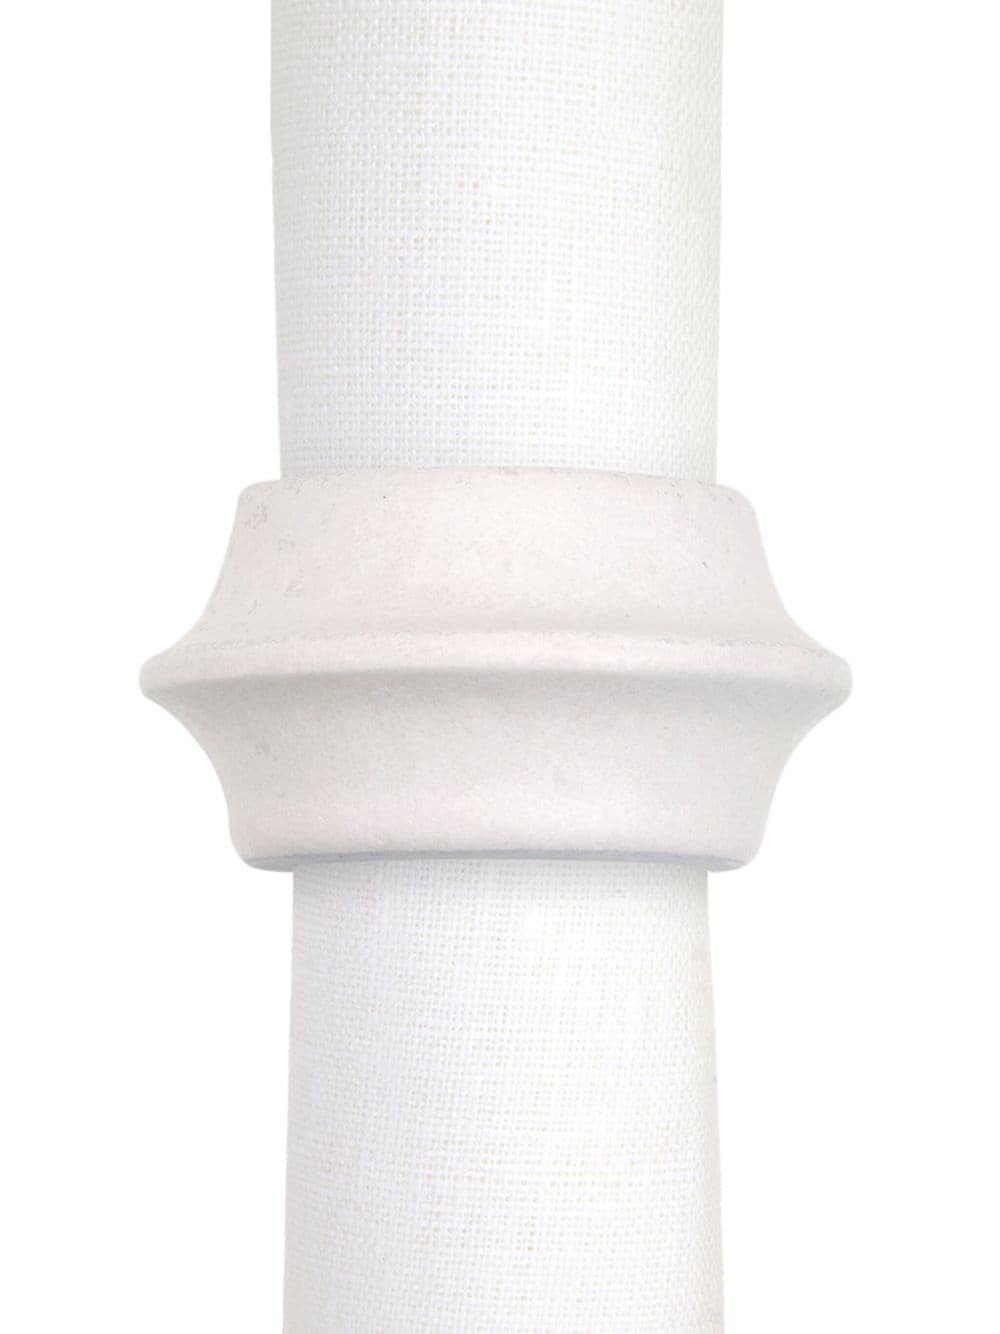 L'Objet Terra porcelain napkin rings (set of four) - White von L'Objet